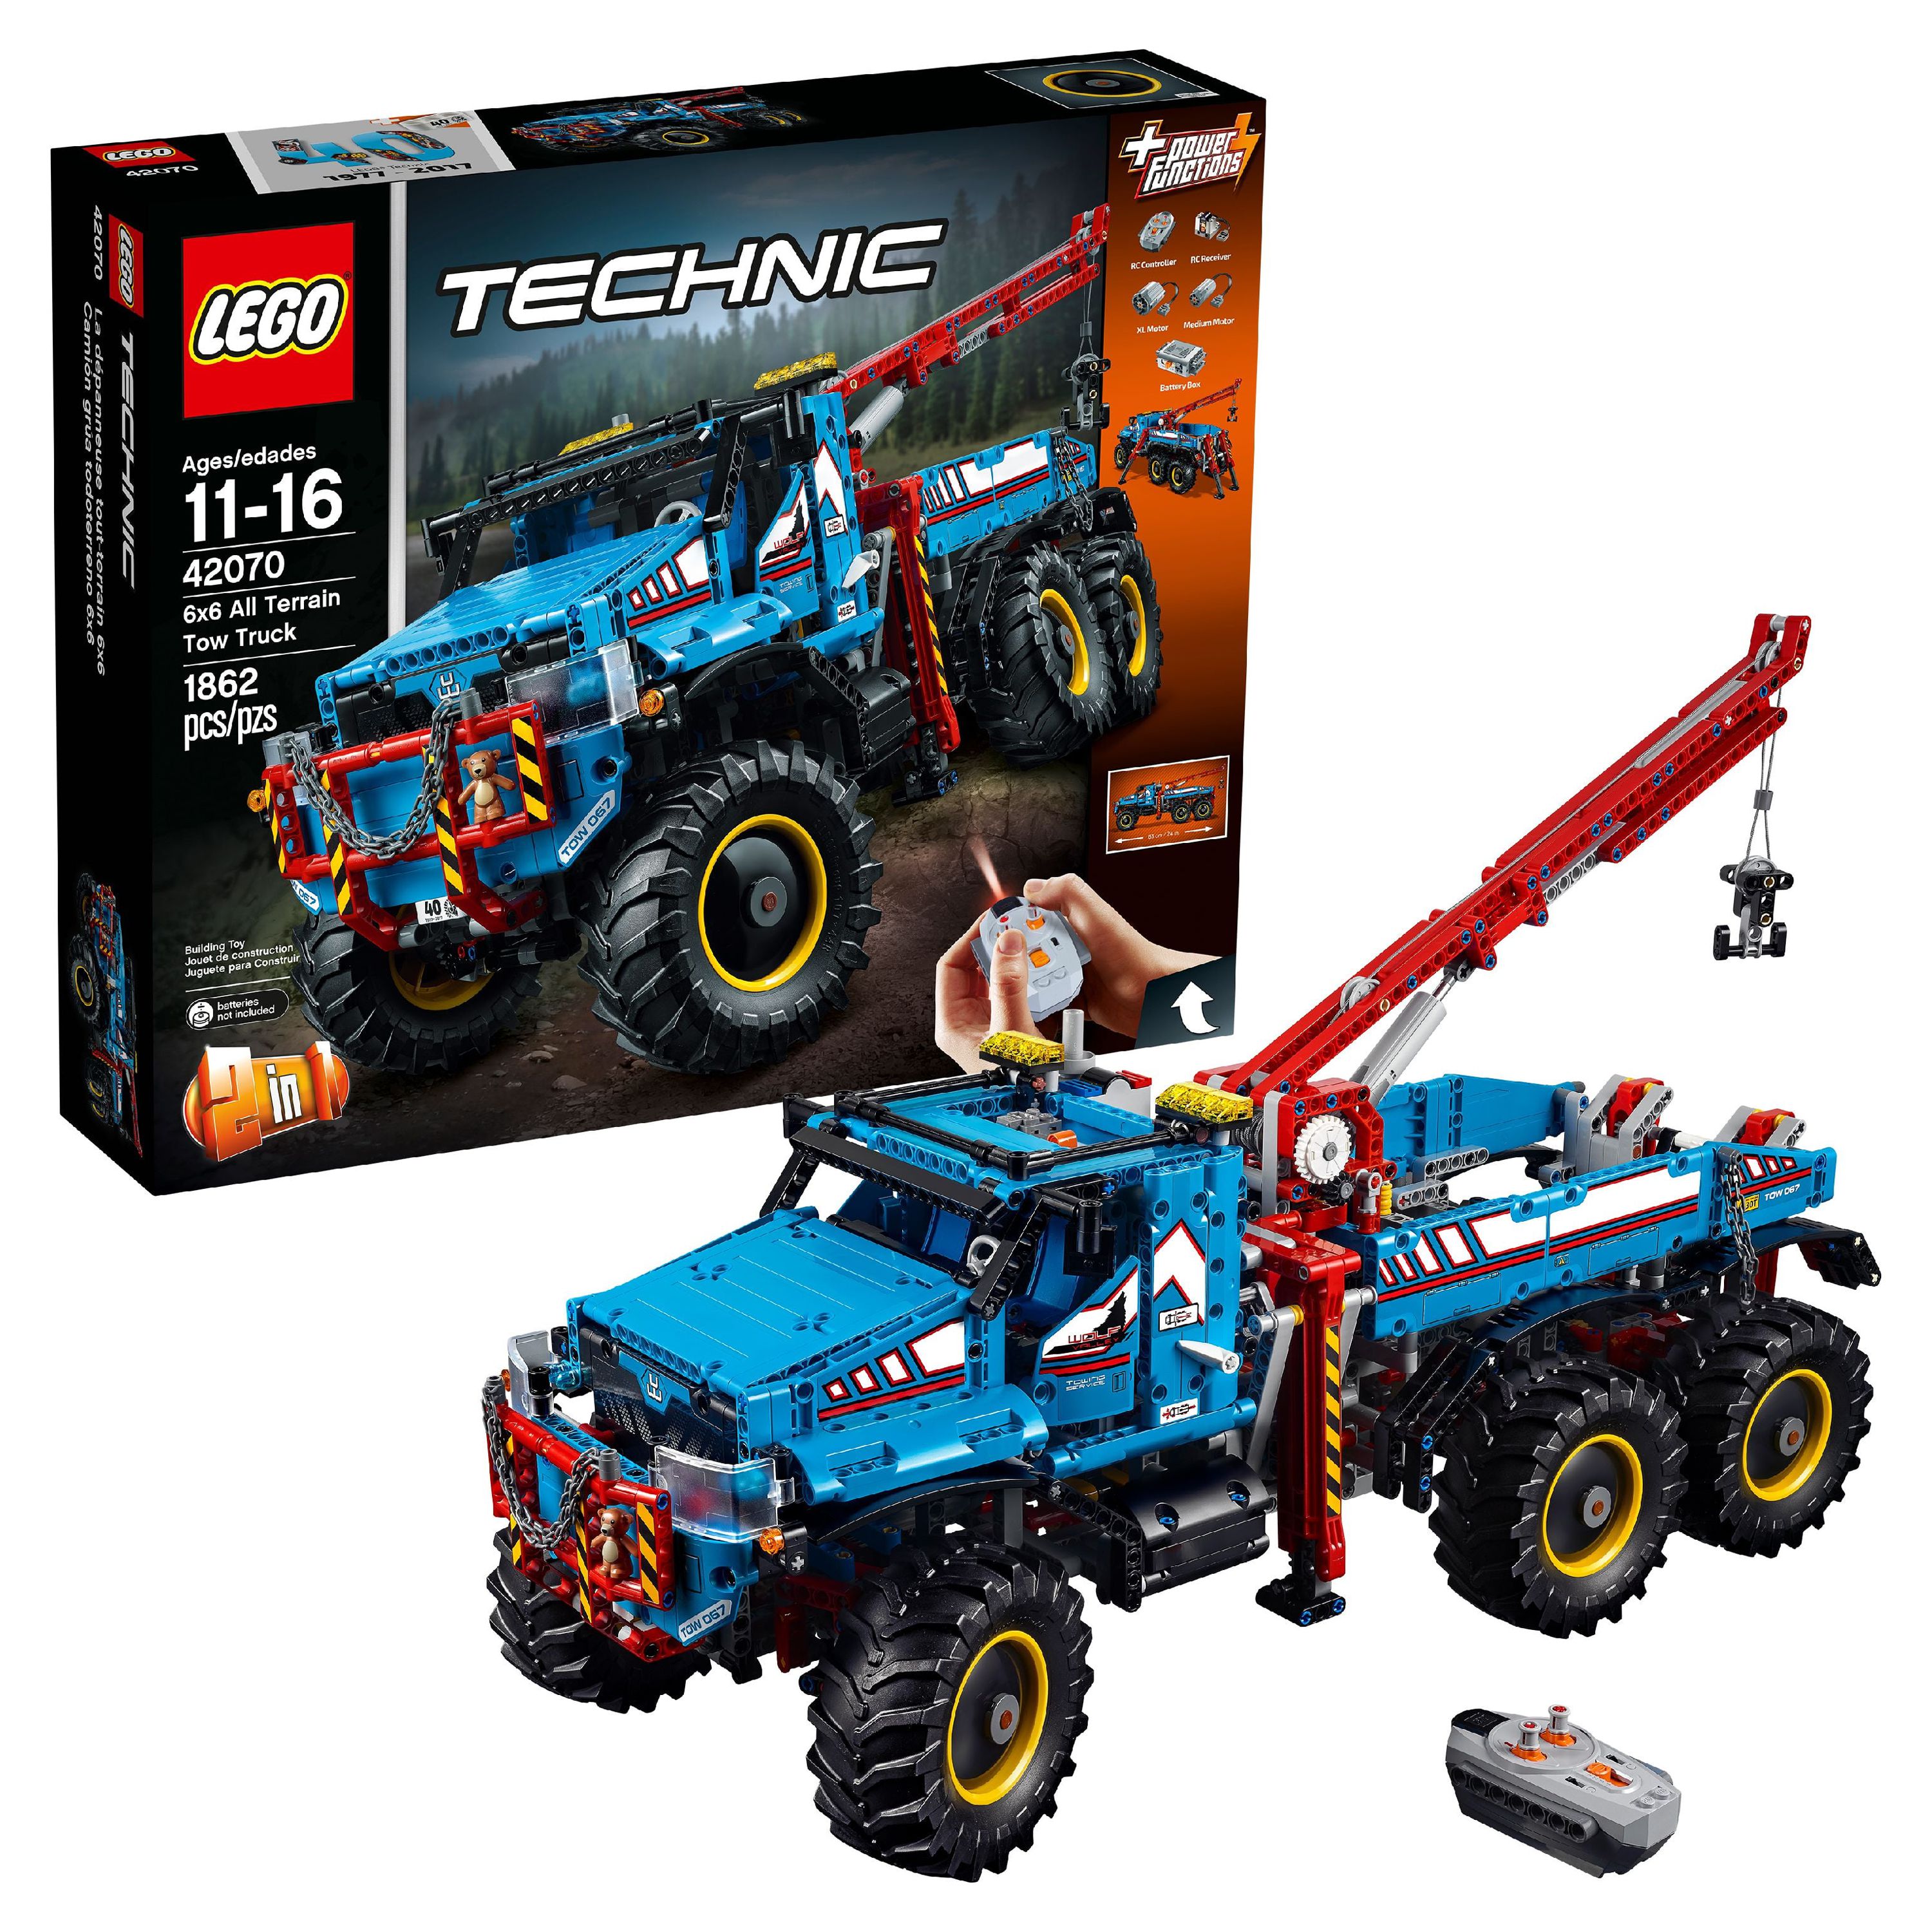 LEGO Technic 6x6 All Terrain Tow Truck 42070 - image 1 of 4